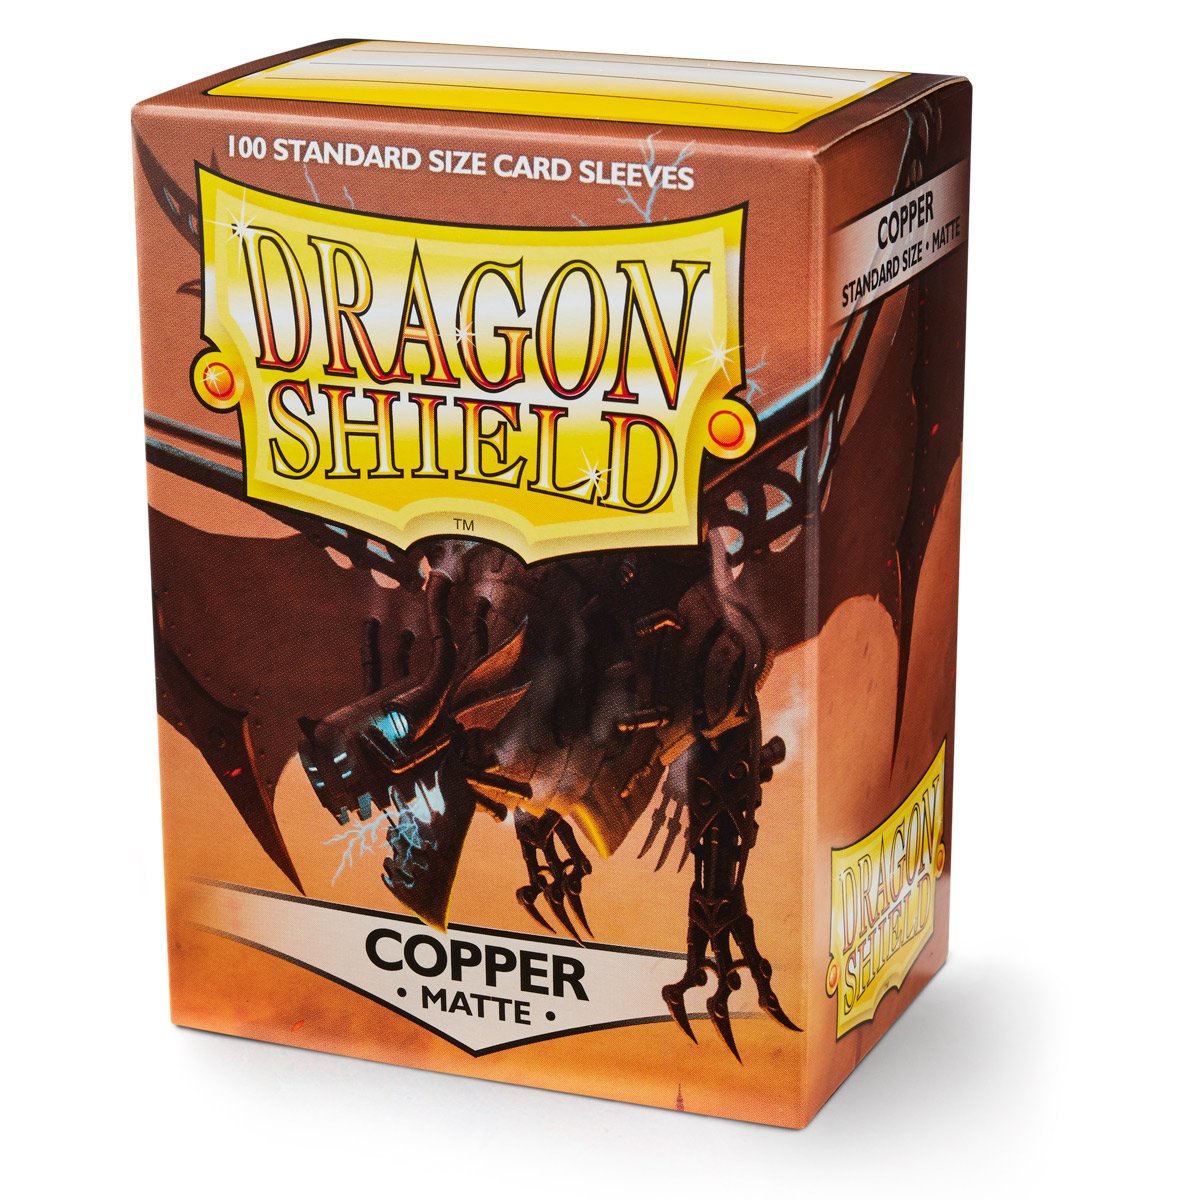 Dragon Shield Standard Size Sleeves  Matte Copper 100CT - Card Sleeves are Smooth & Tough - Compatible with Pokemon, Yu-Gi-Oh!, & Magic The Gathering Card Sleeves  MTG, TCG, OCG